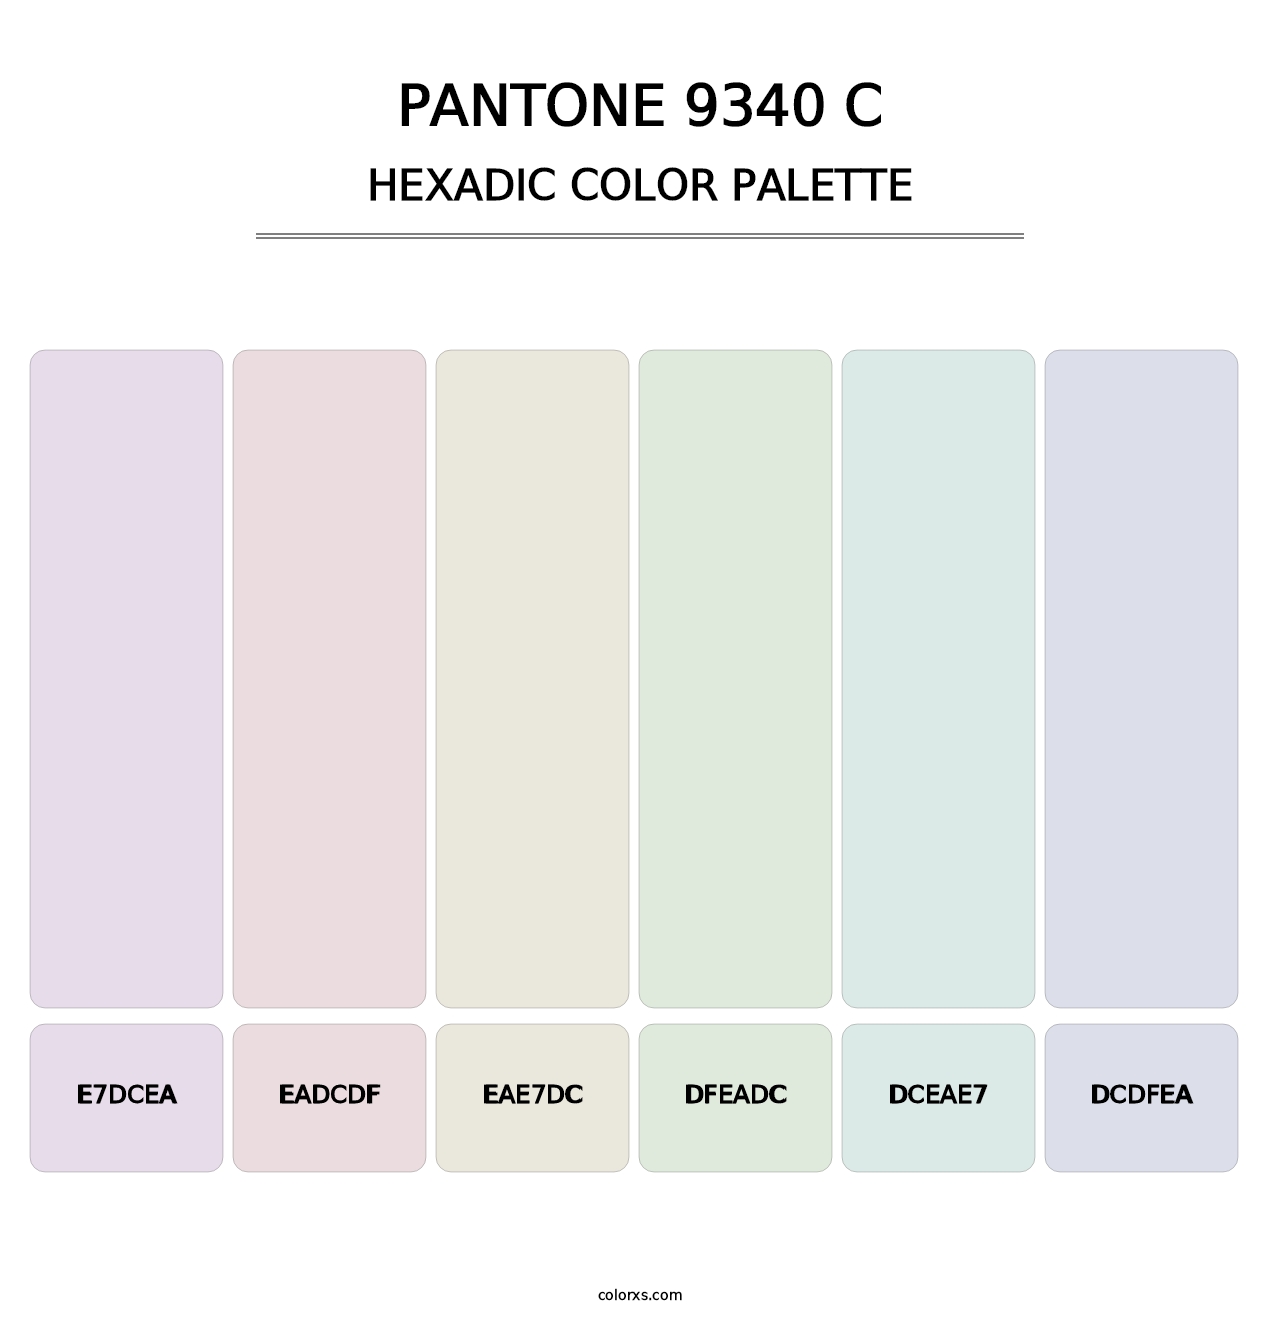 PANTONE 9340 C - Hexadic Color Palette